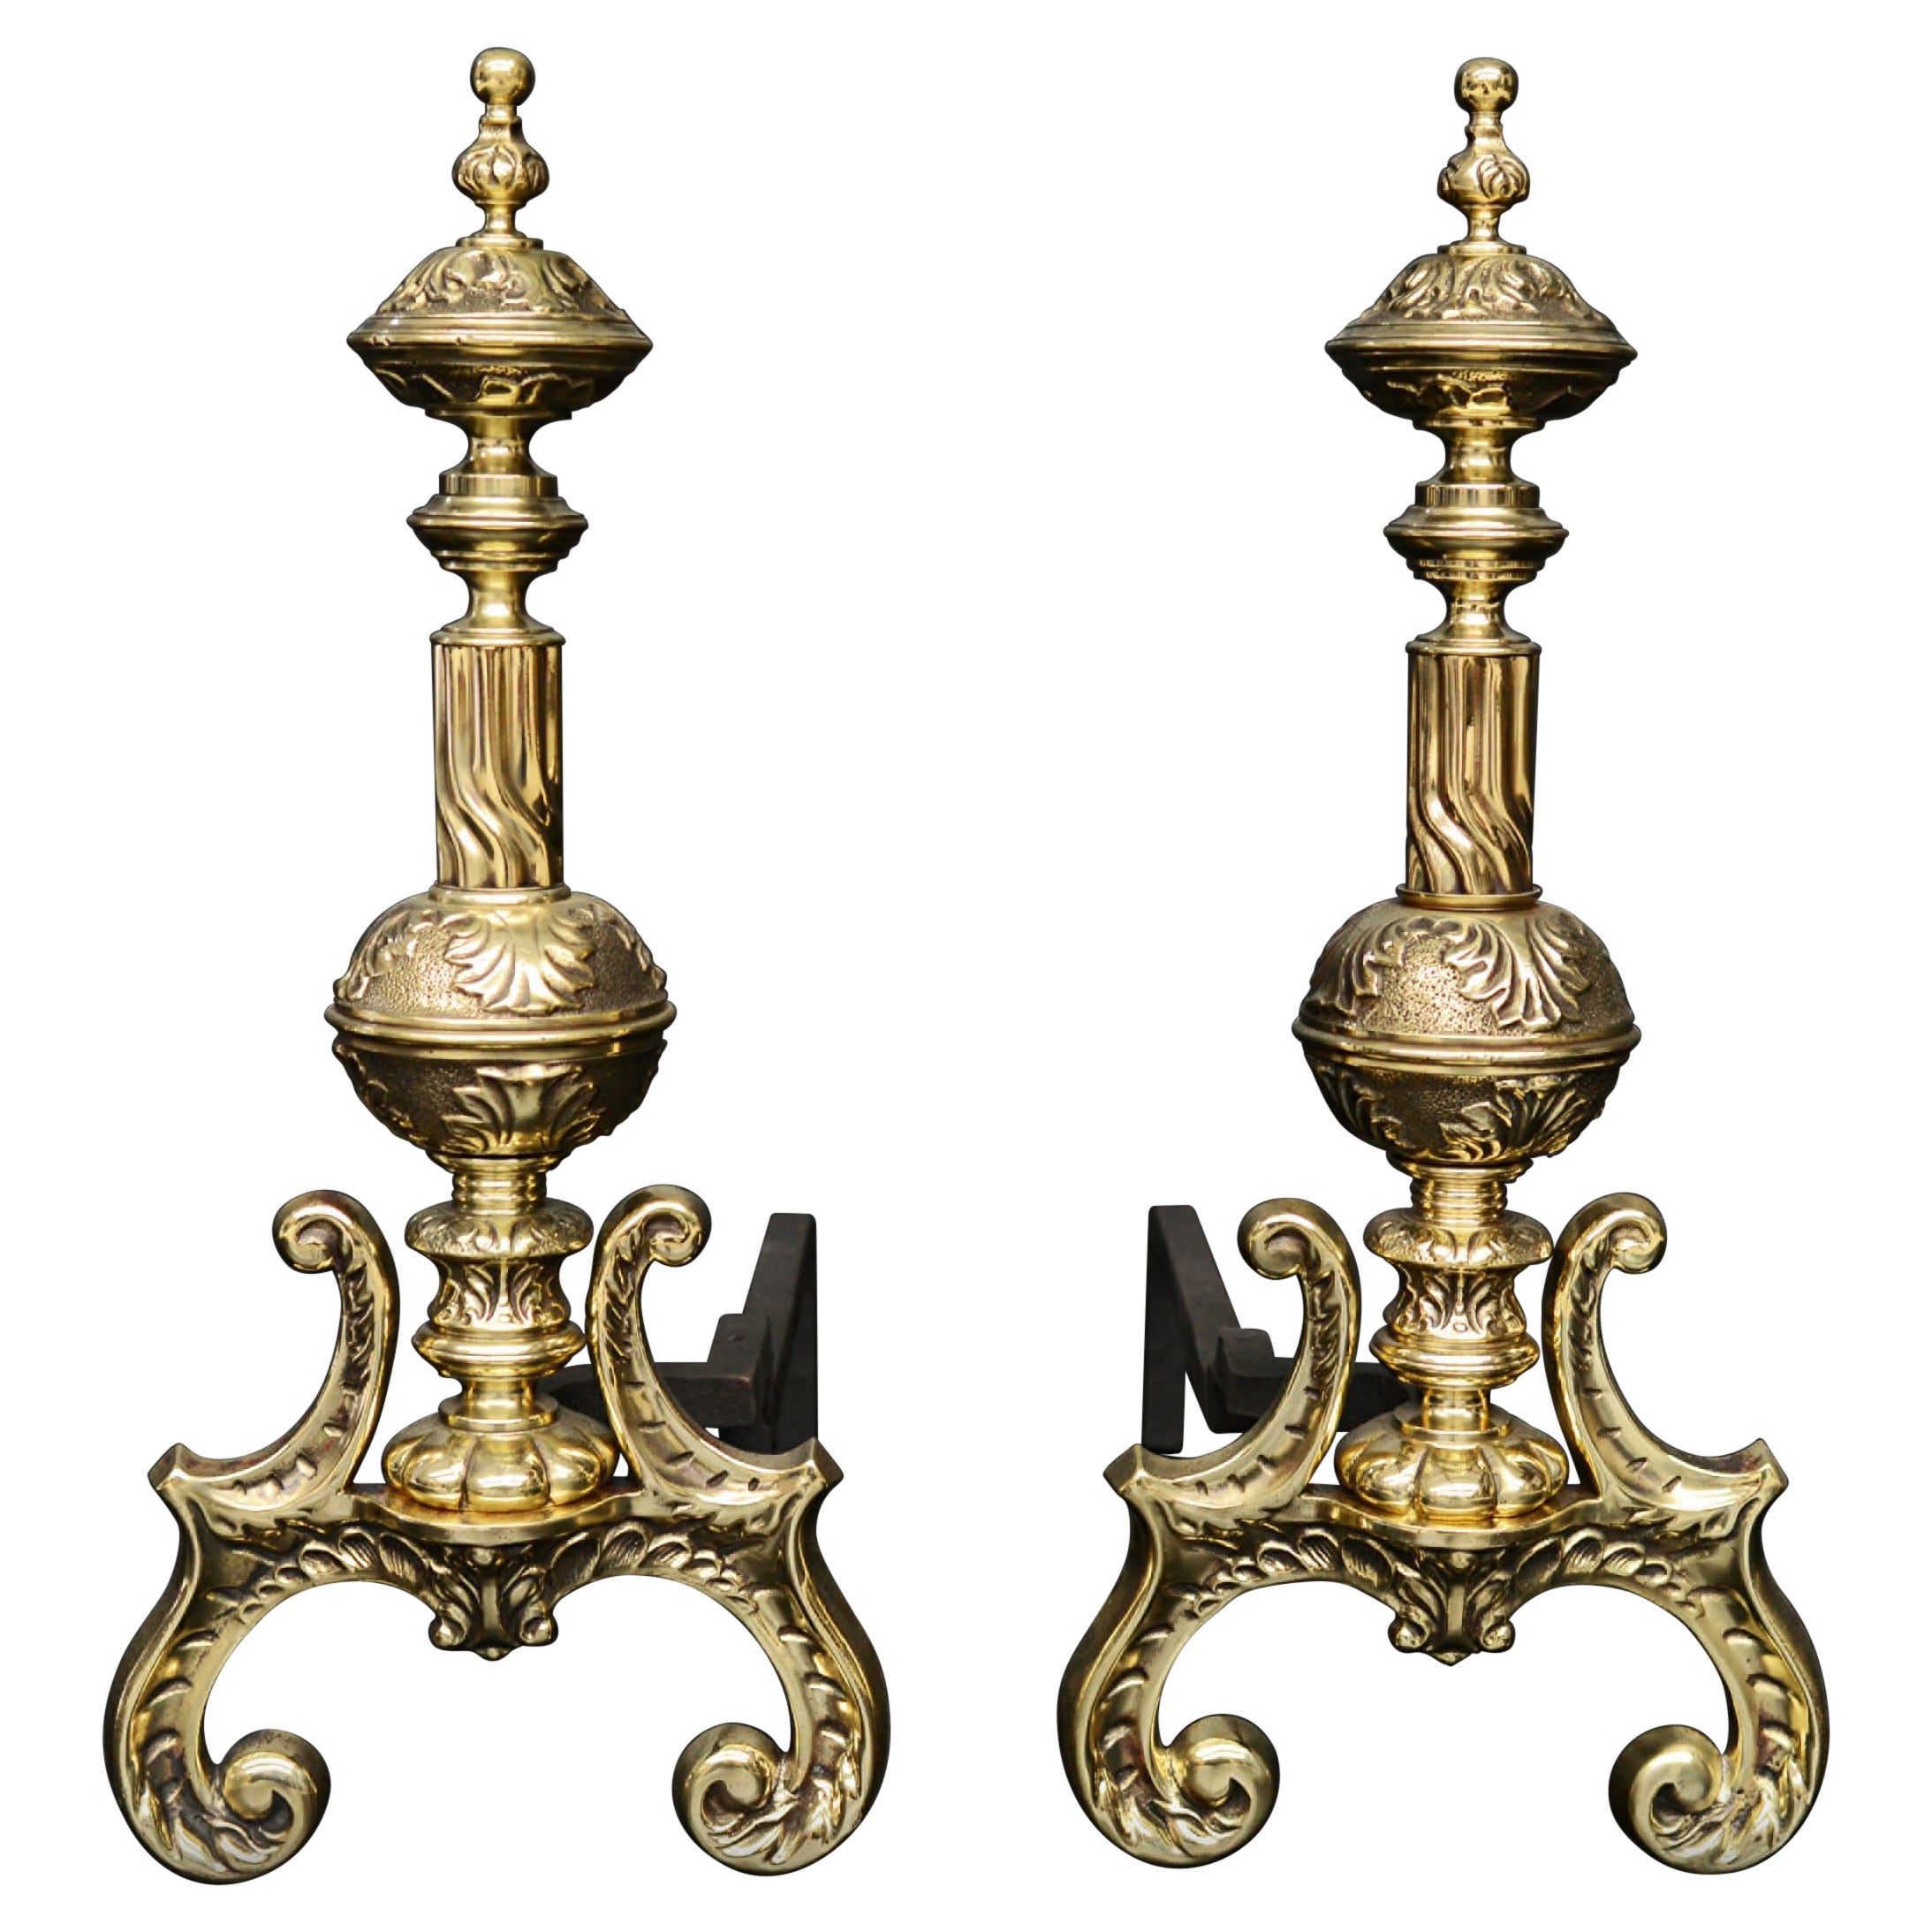 Ornate Pair of Brass Firedogs